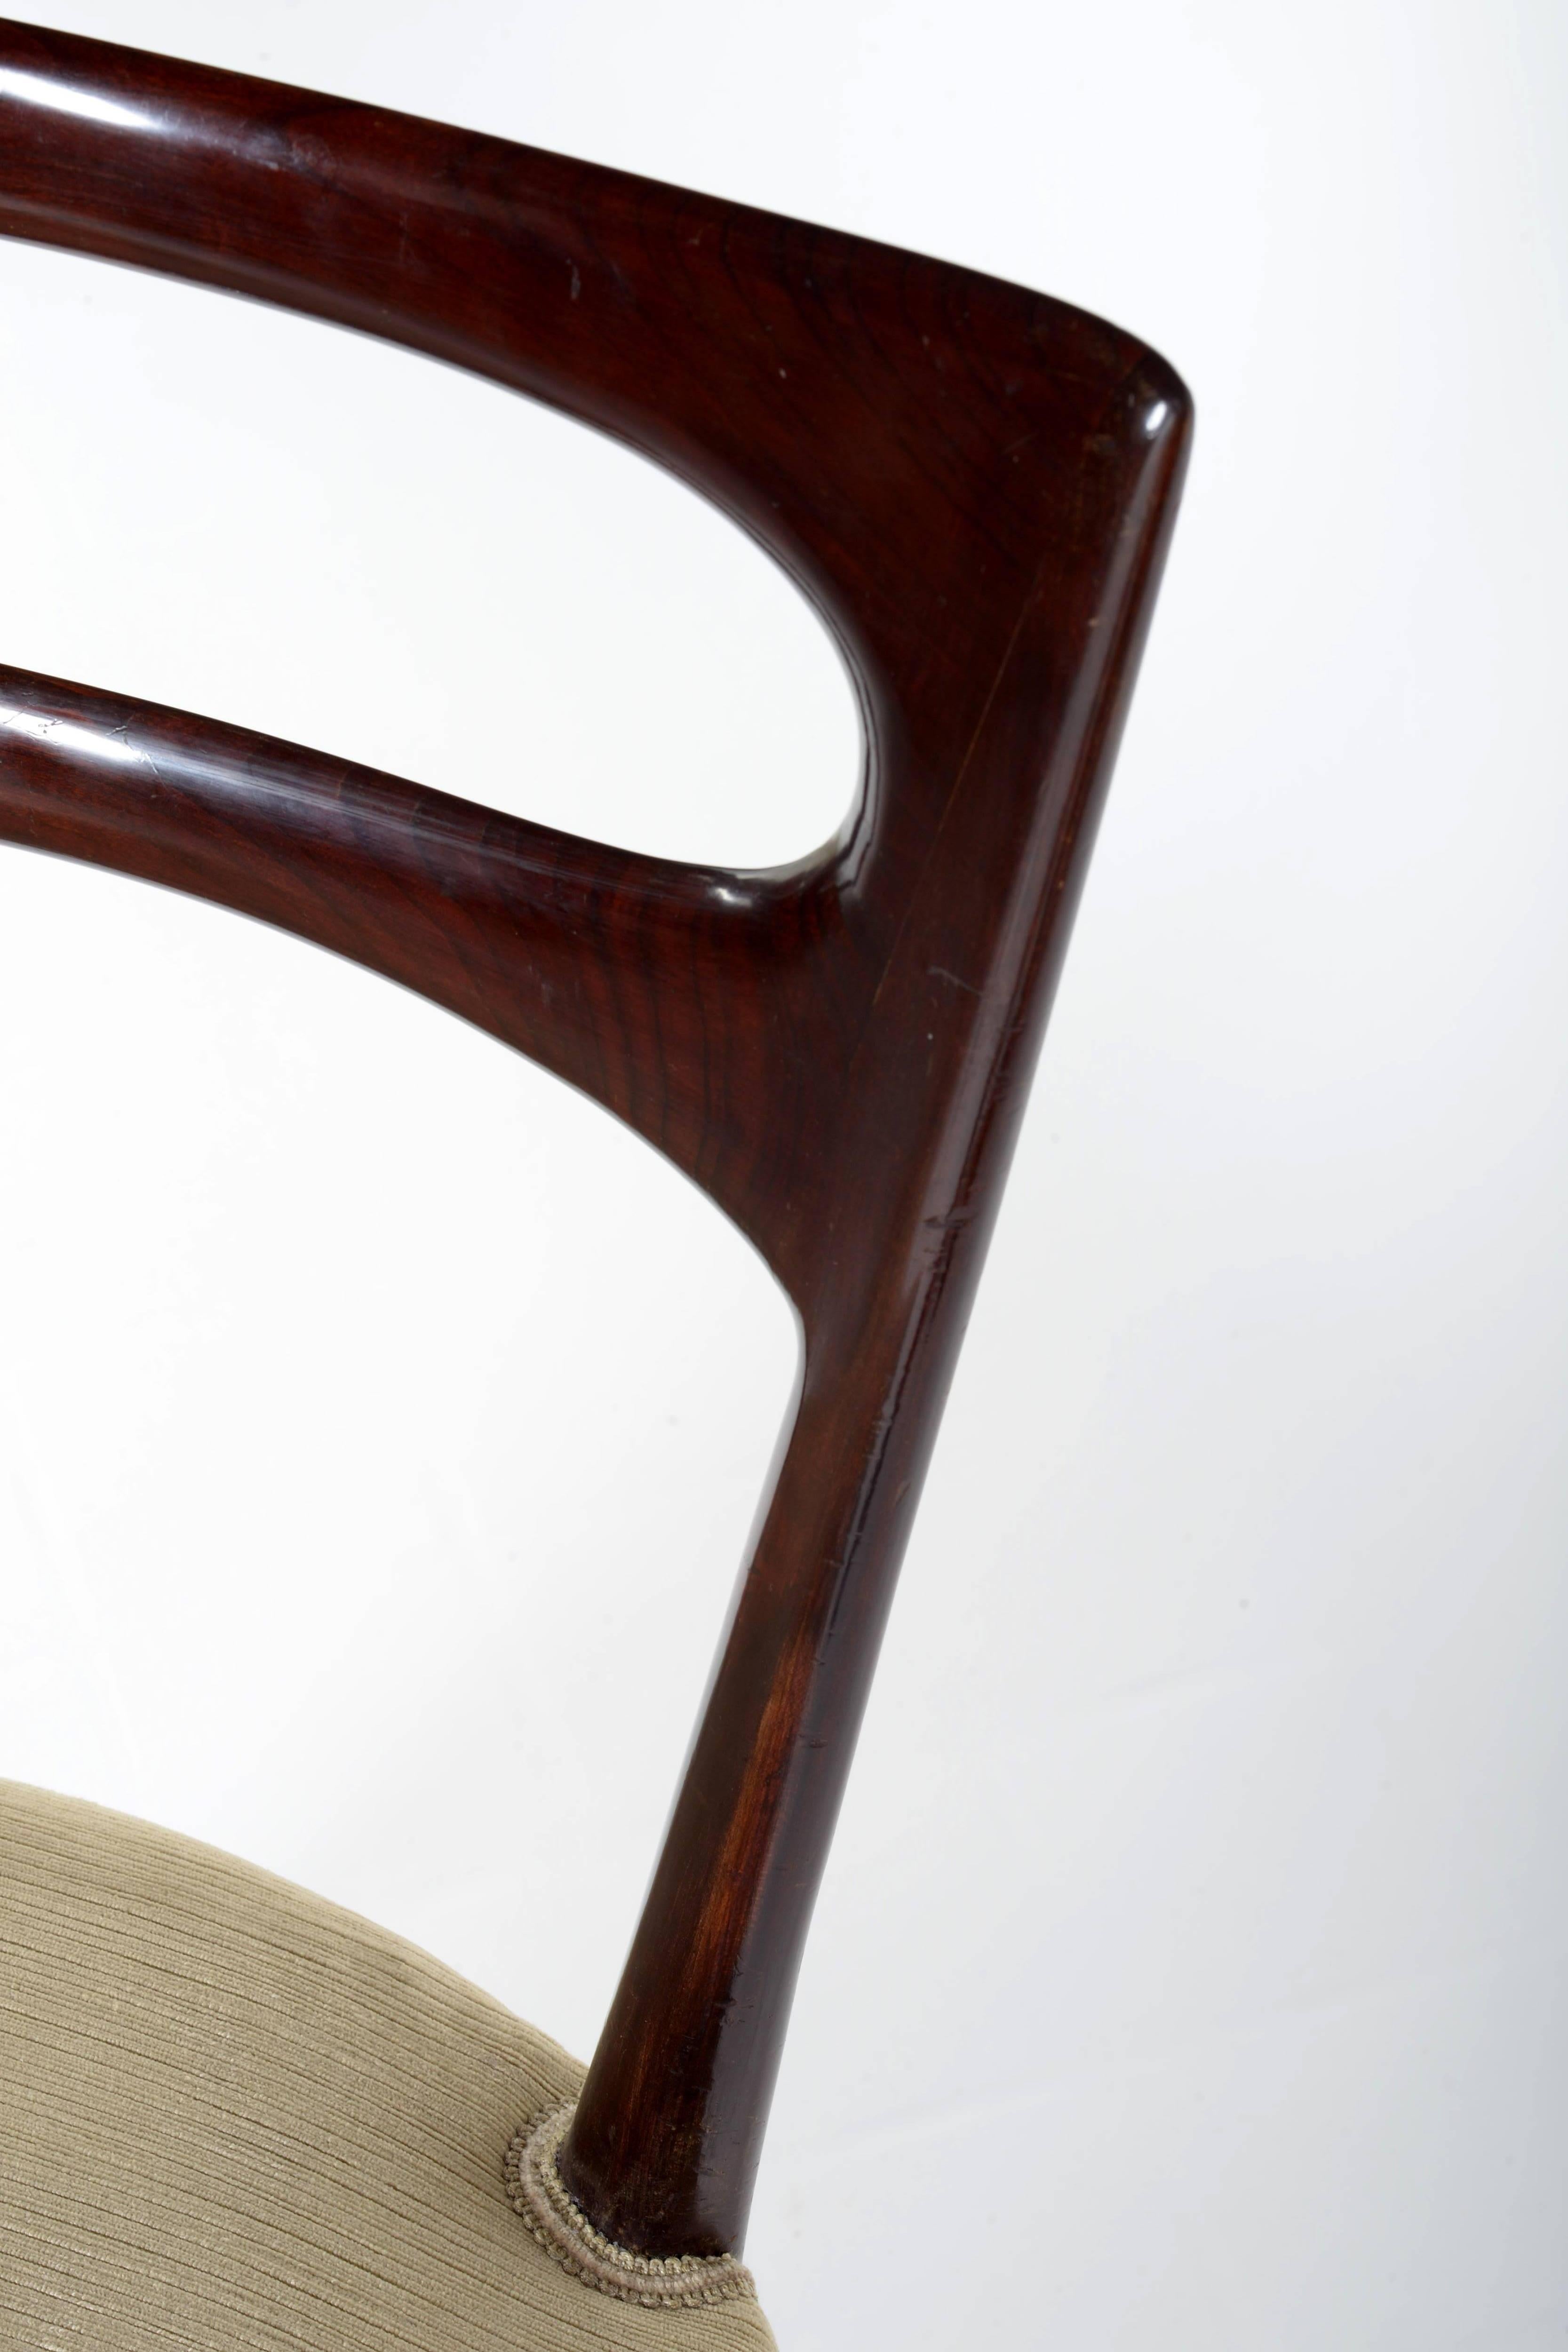 Four Stylish Italian 1950s Chairs by Paolo Buffa 5